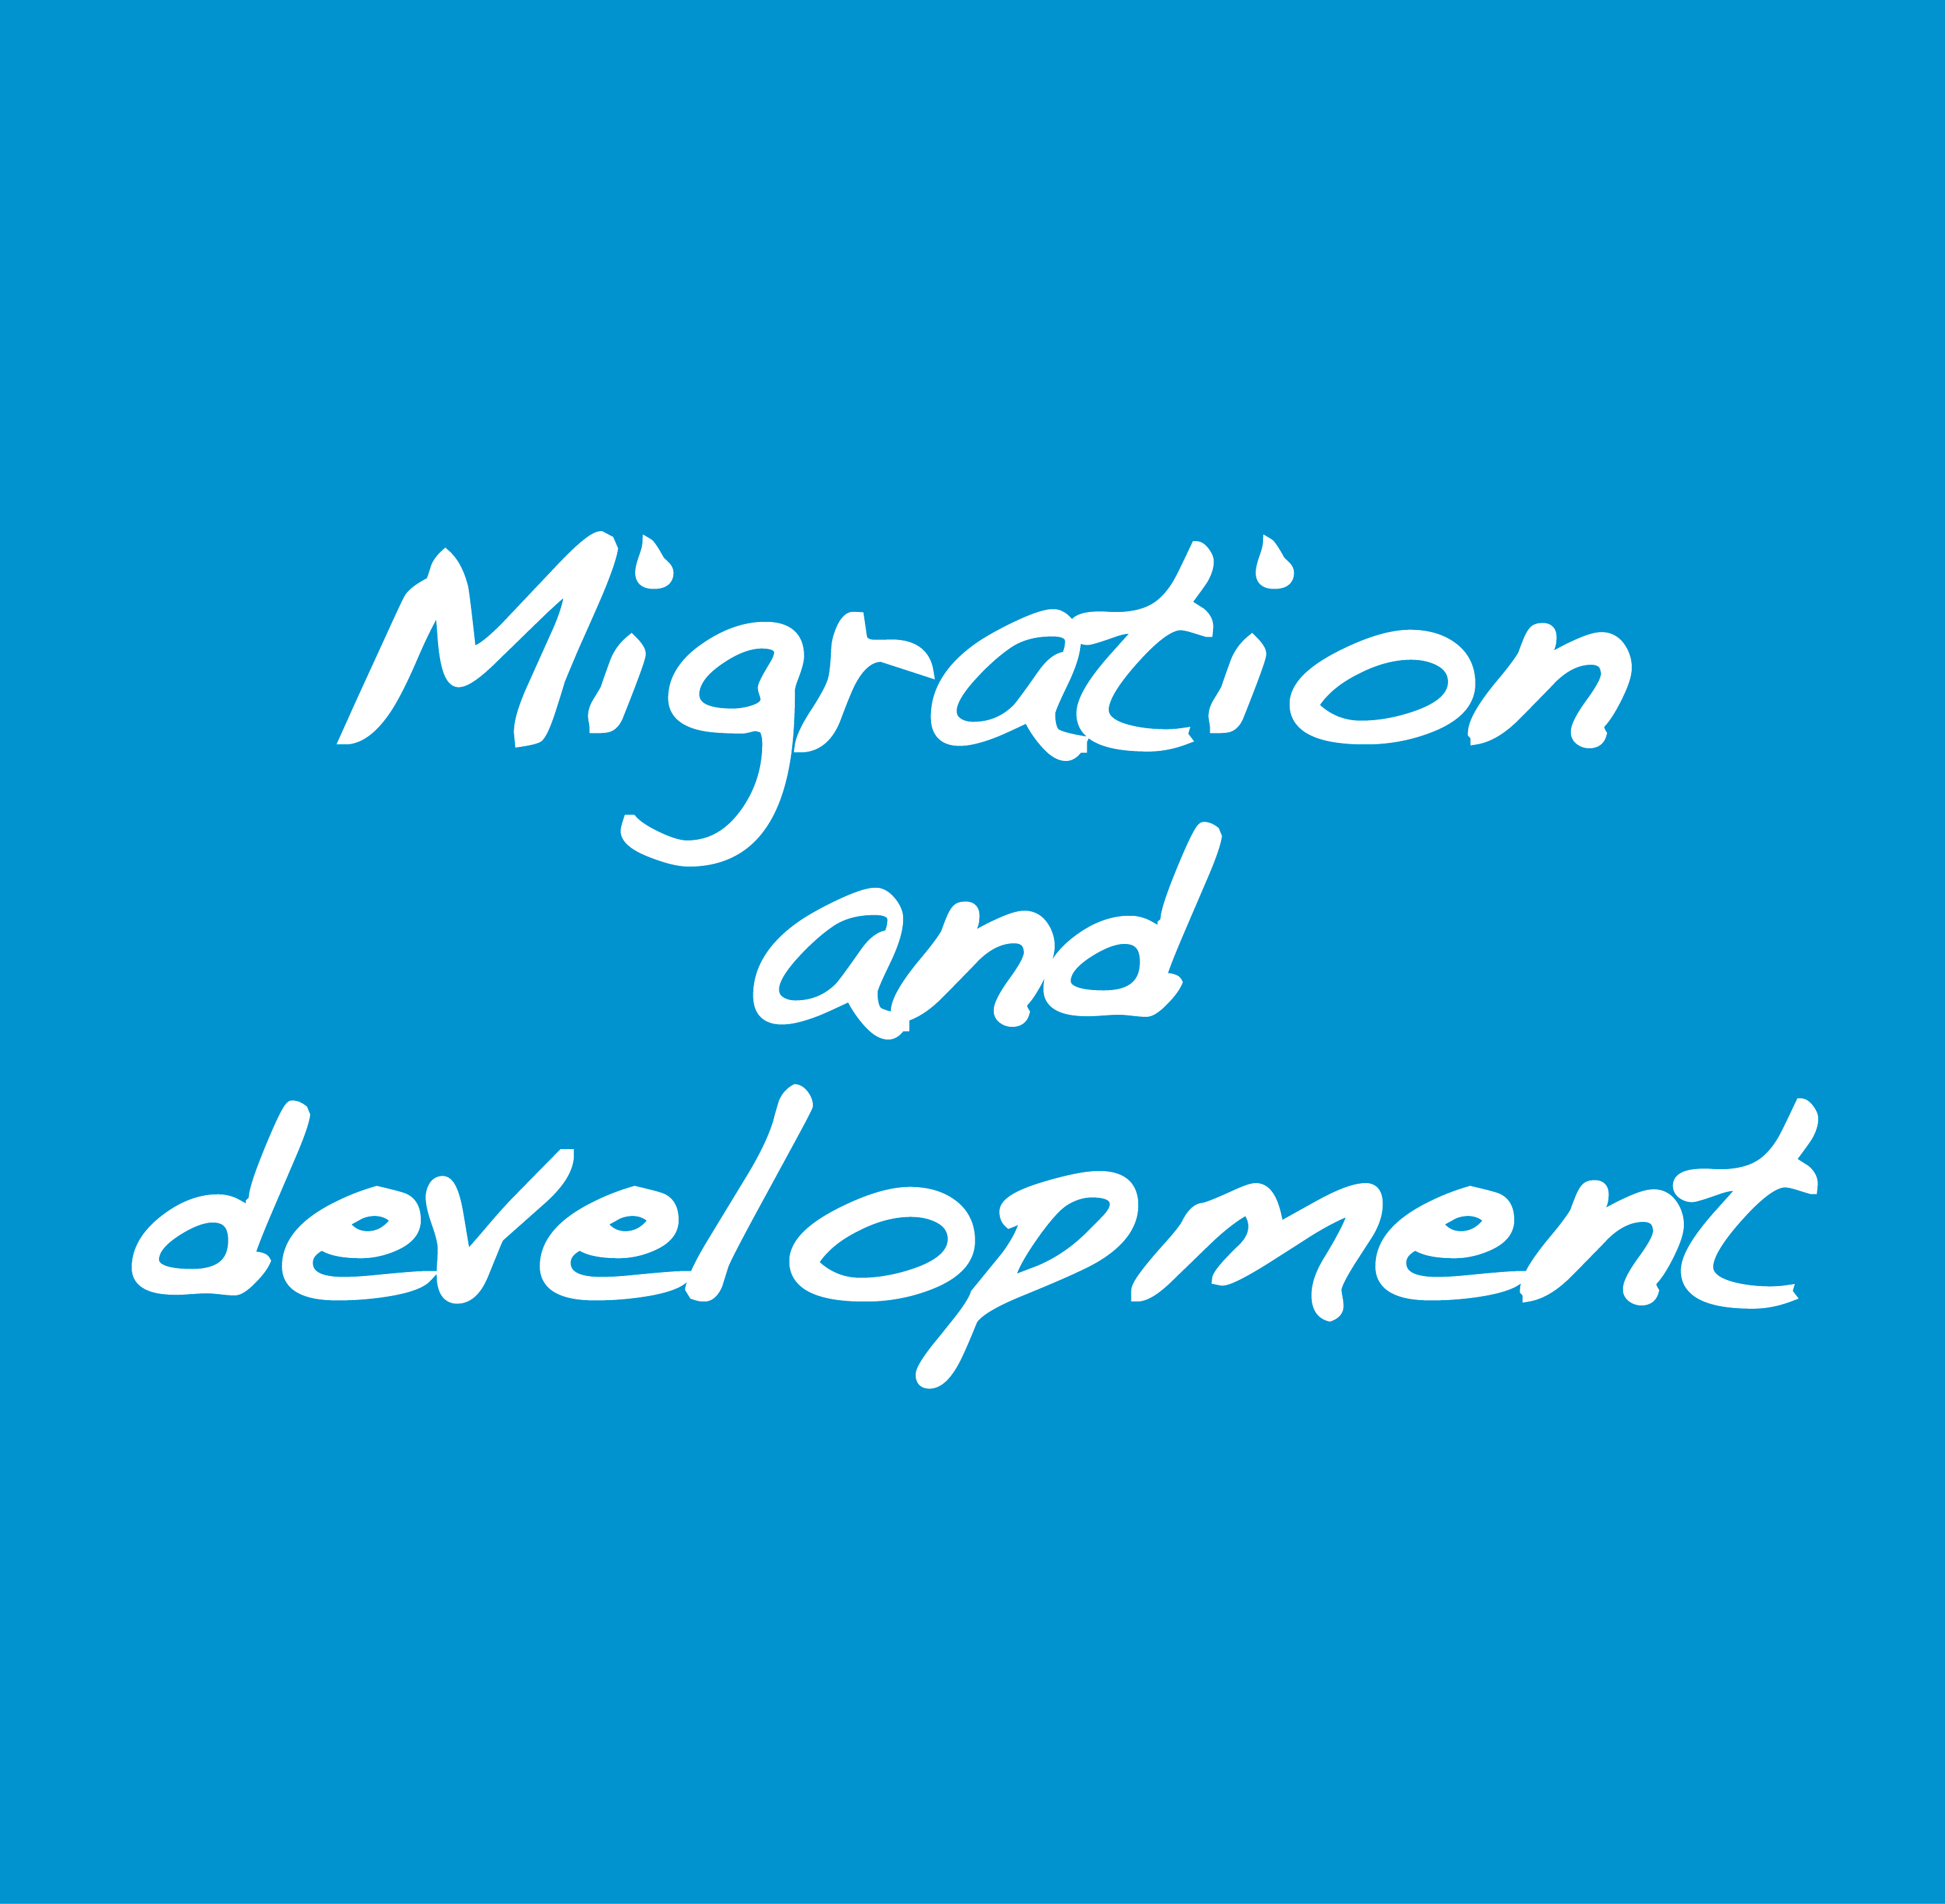 Migration and development